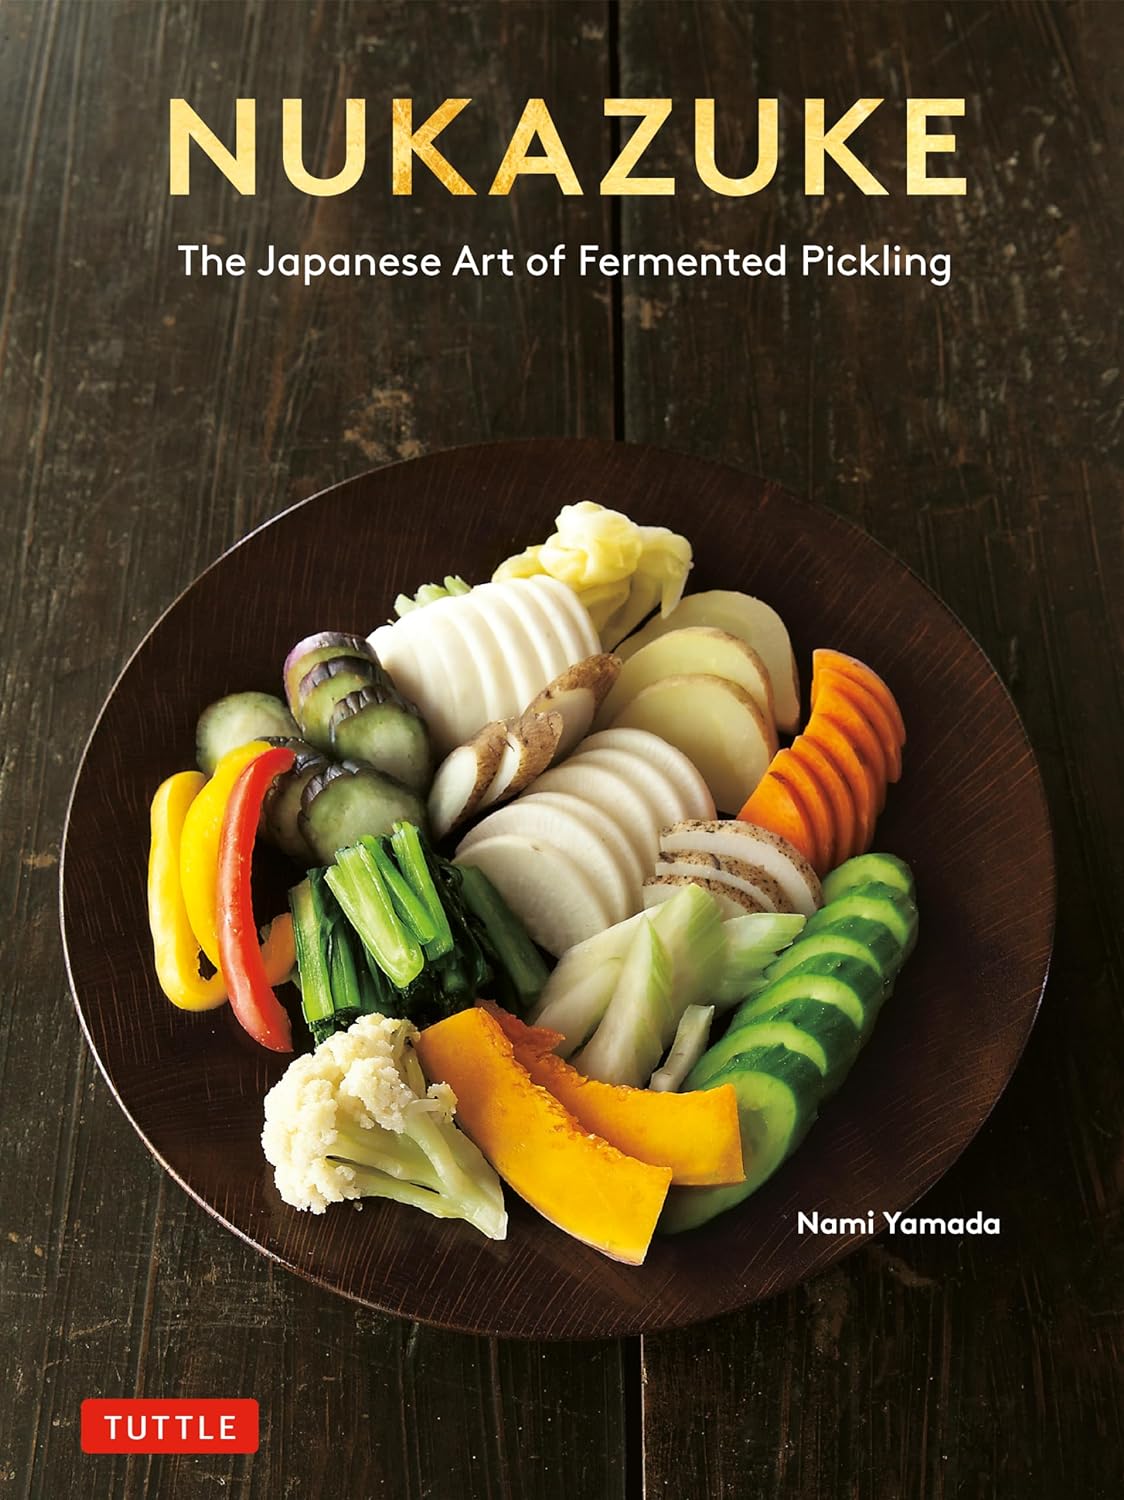 Nukazuke: The Japanese Art of Fermented Pickling (Nami Yamada)